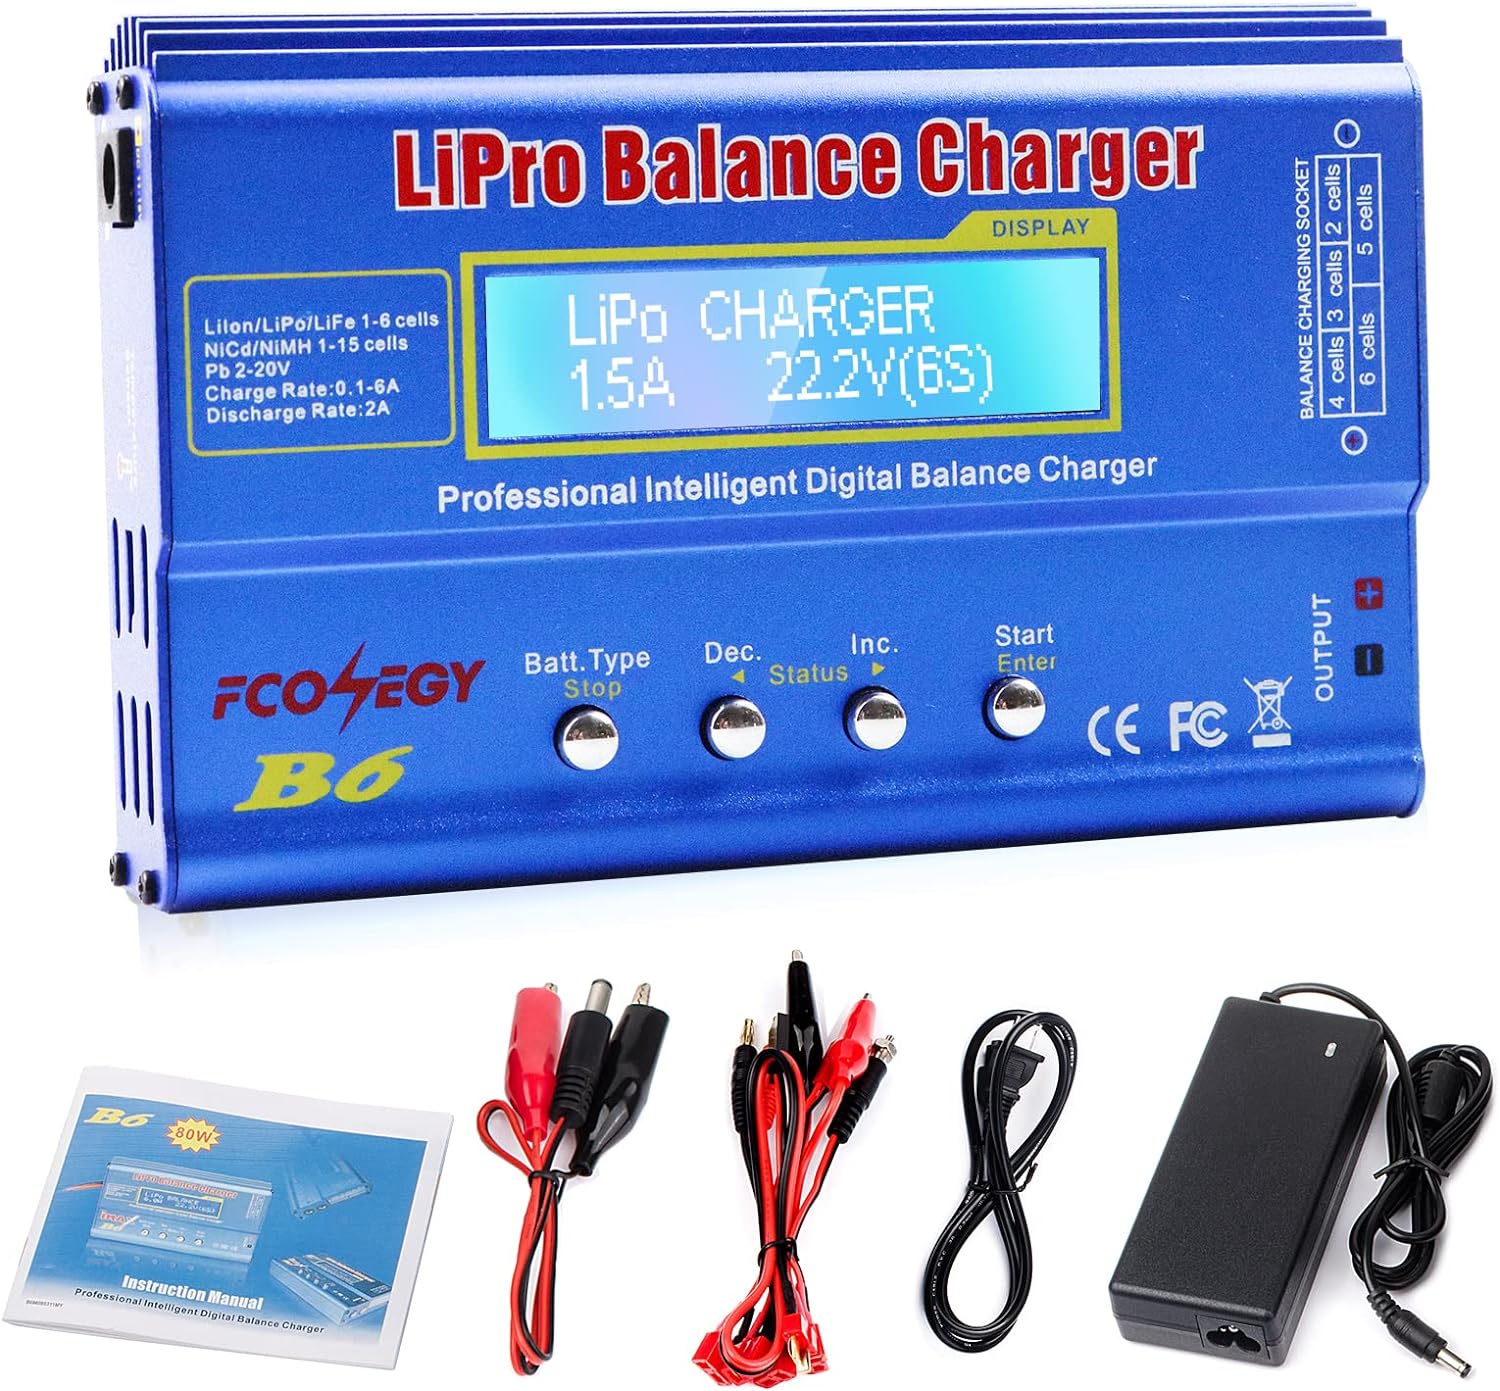 Beennex 80W Battery Balance Charger Discharger,B6 80W Digital LCD Balance Charger Discharger for Li-Po/Li-ion/Li-Fe/NiMH/NiCd/Pb Without Plug